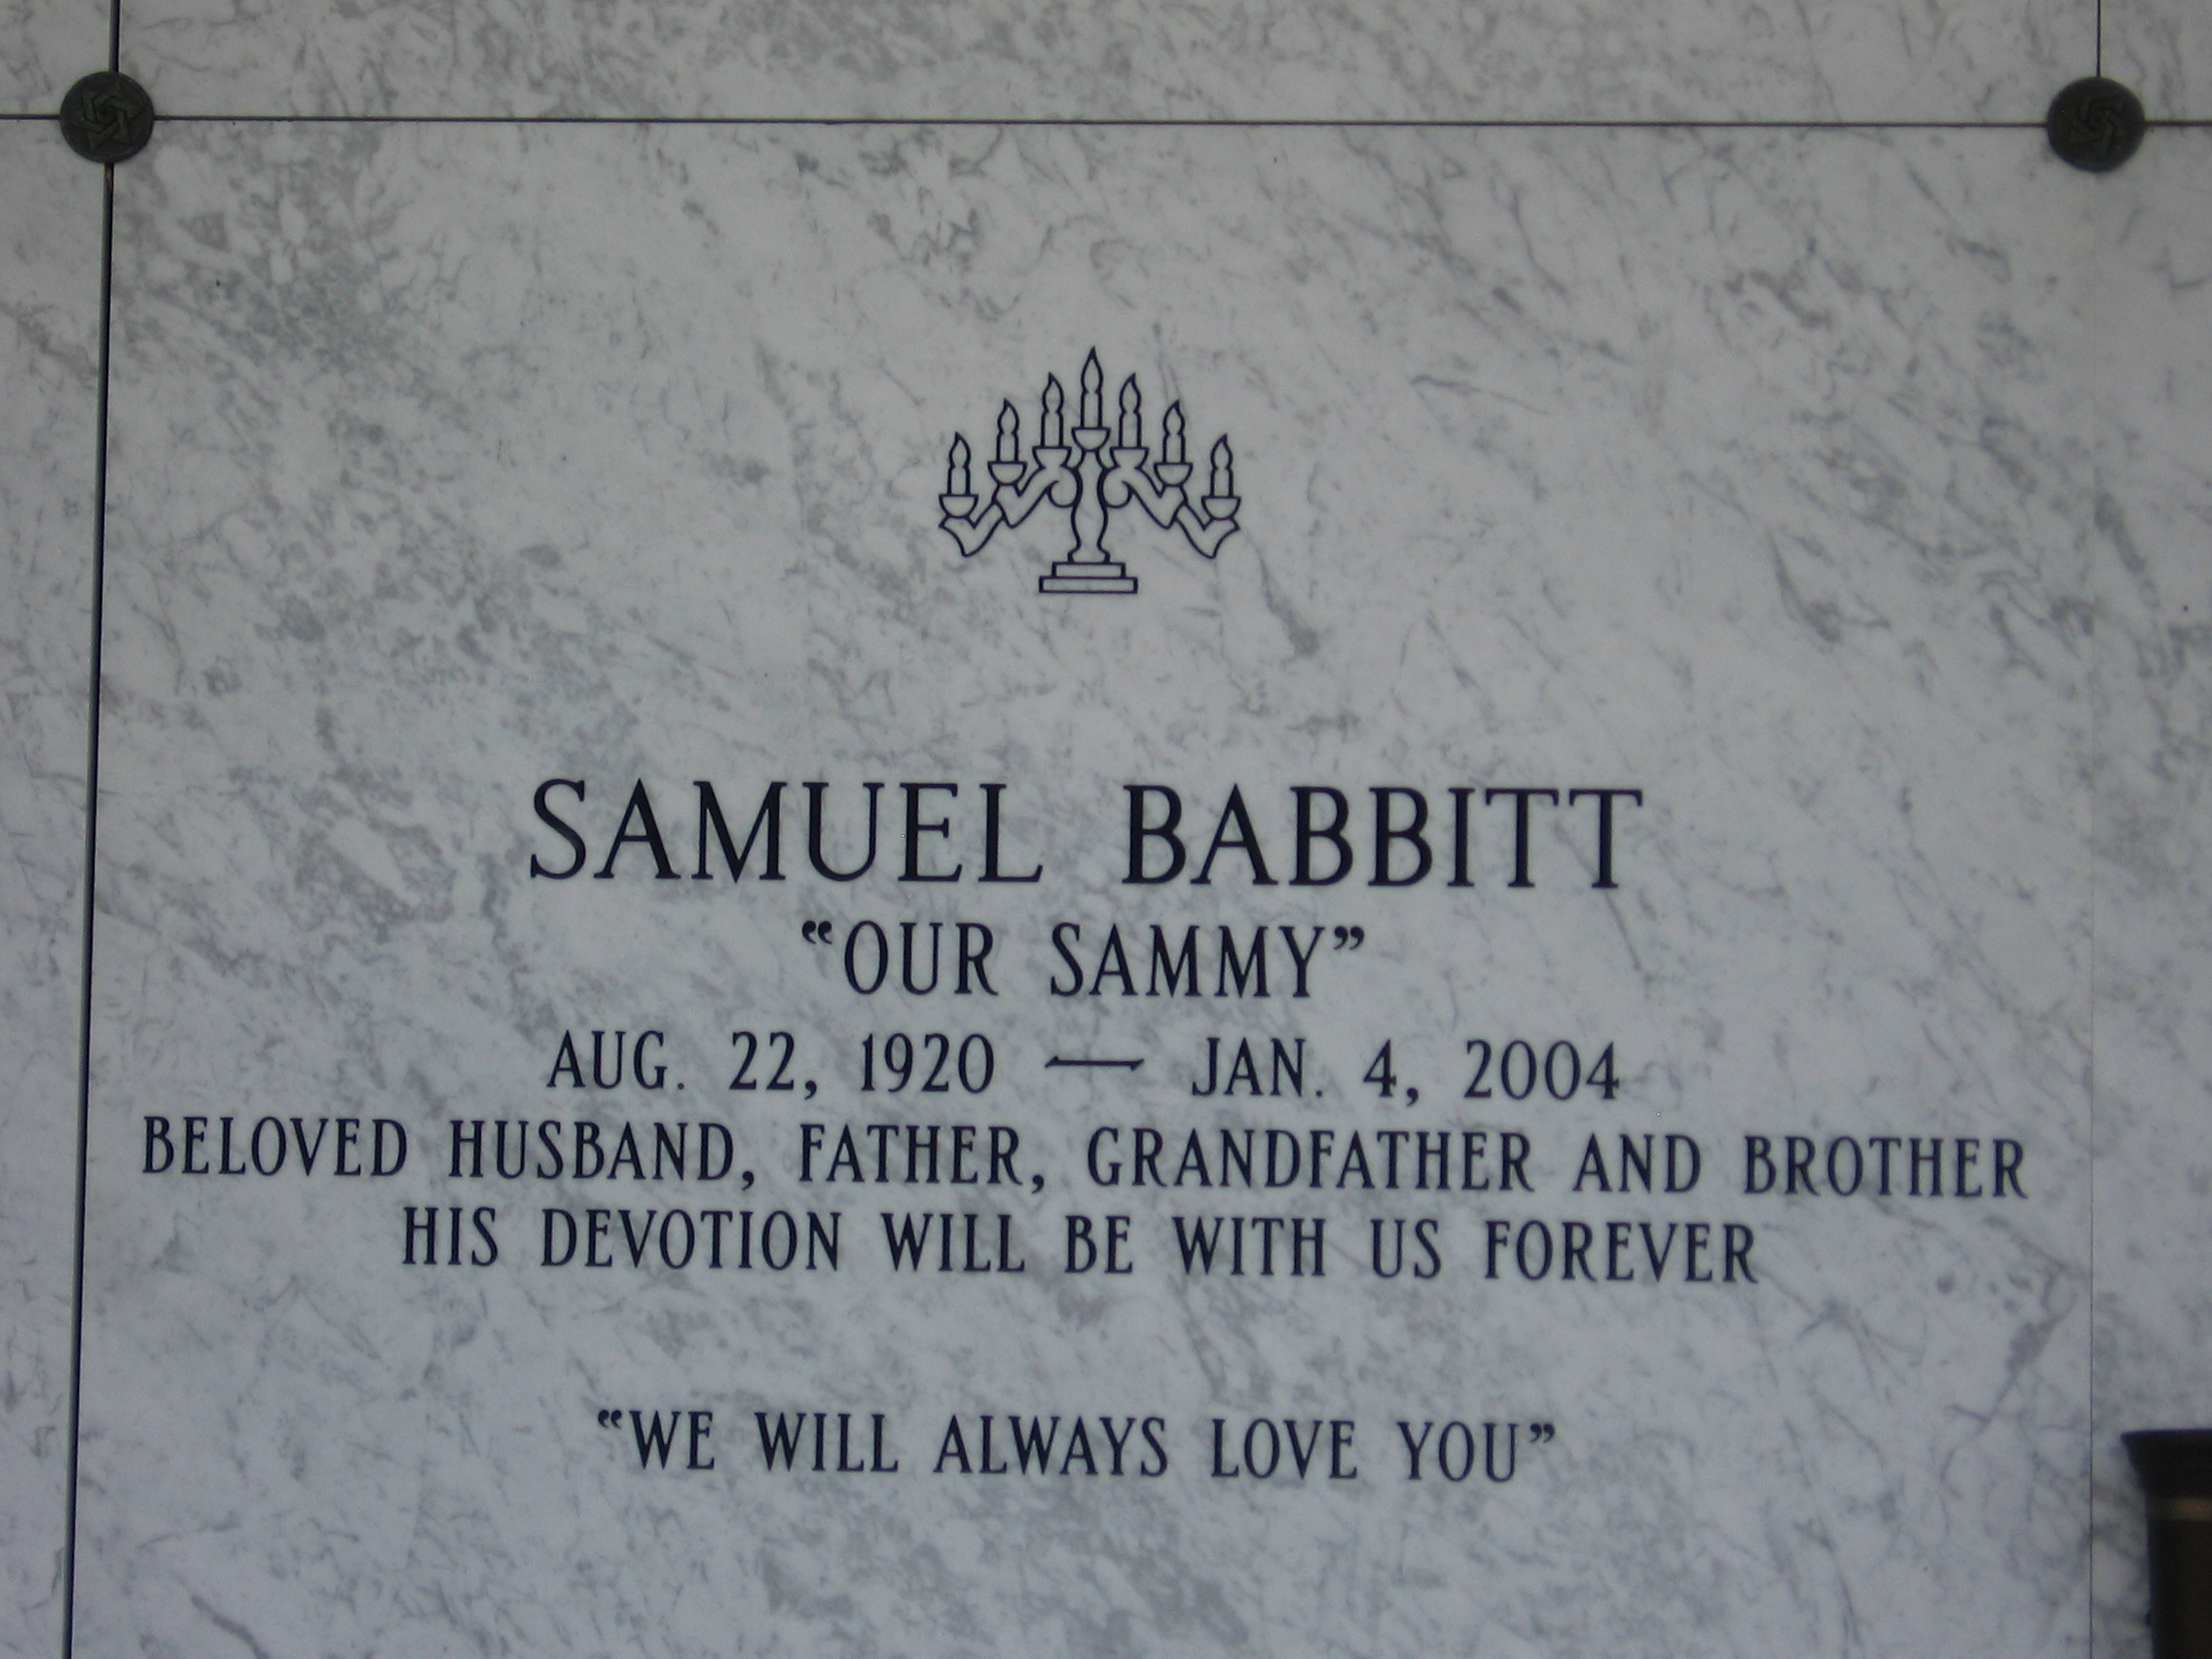 Samuel "Our Sammy" Babbitt